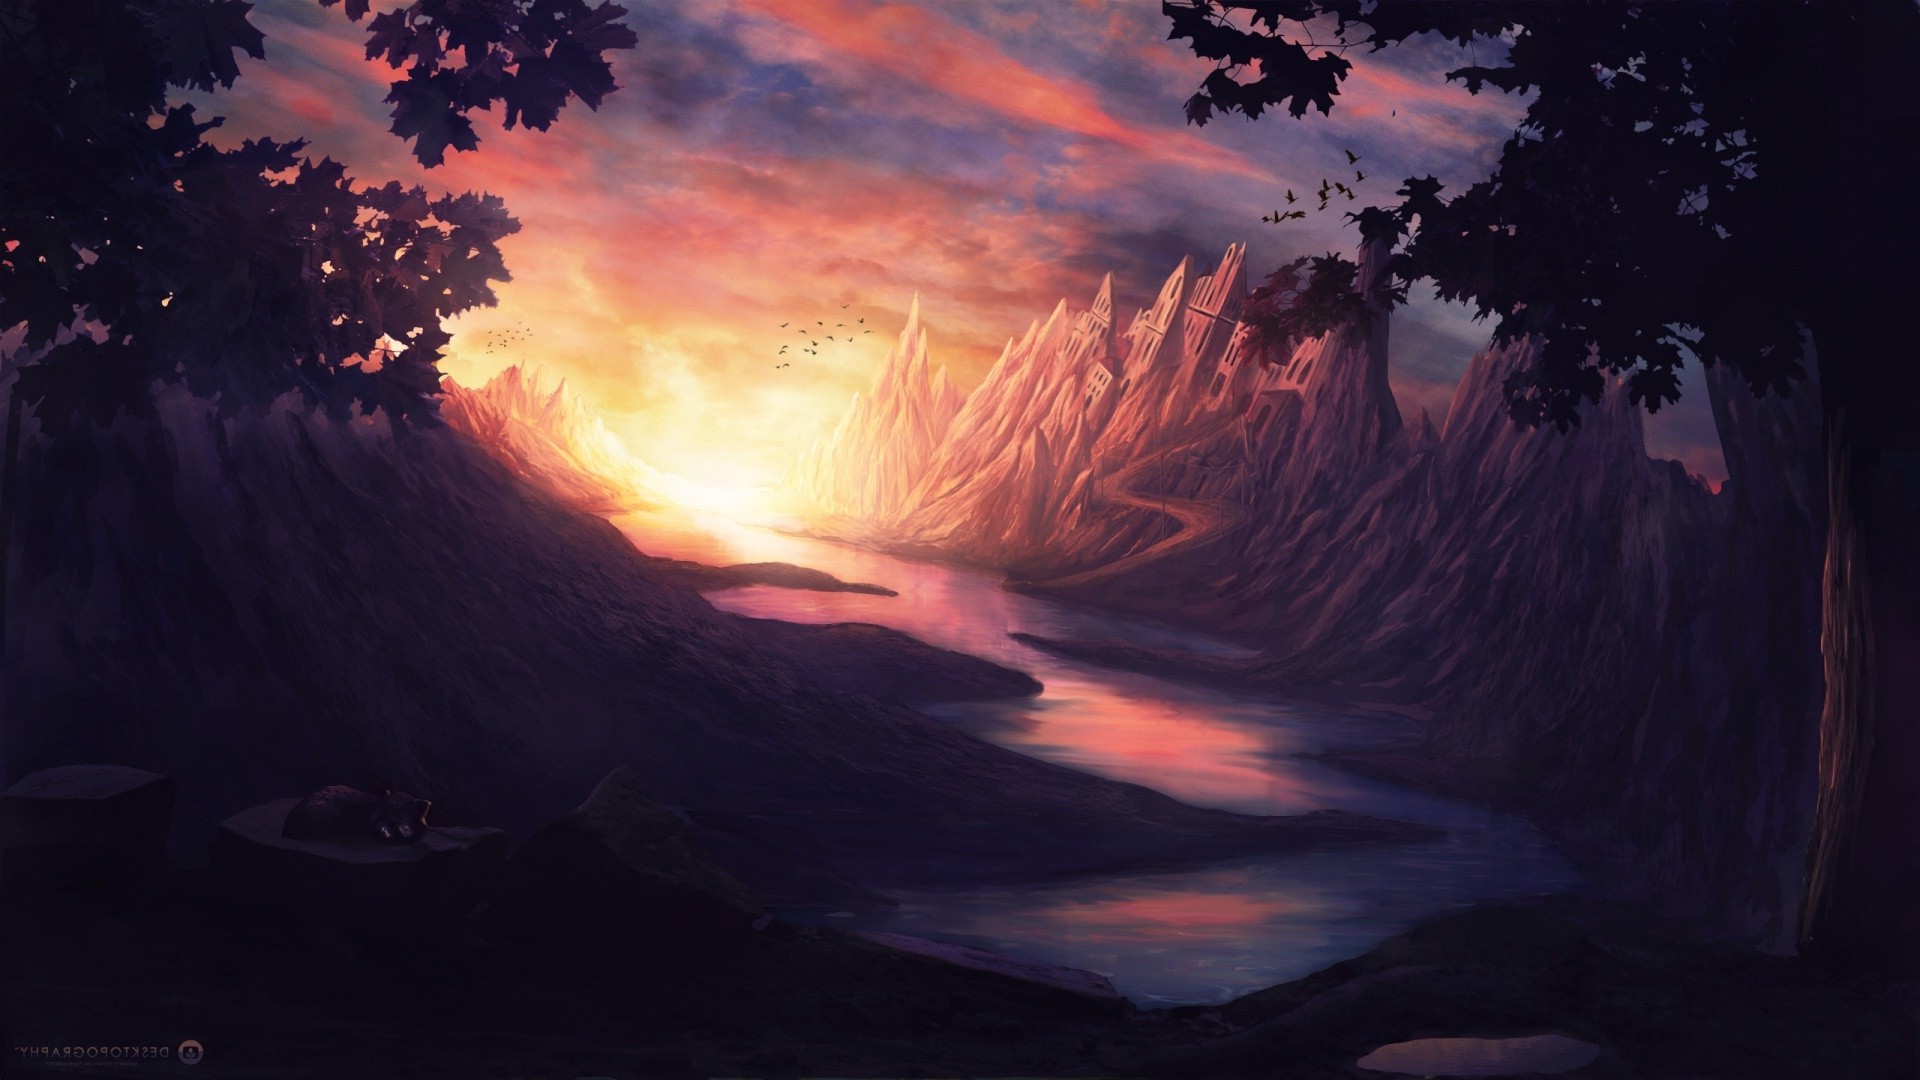 325150-fantasy_art-castle-mountain-river-cat-Sun-clouds-Desktopography.jpg